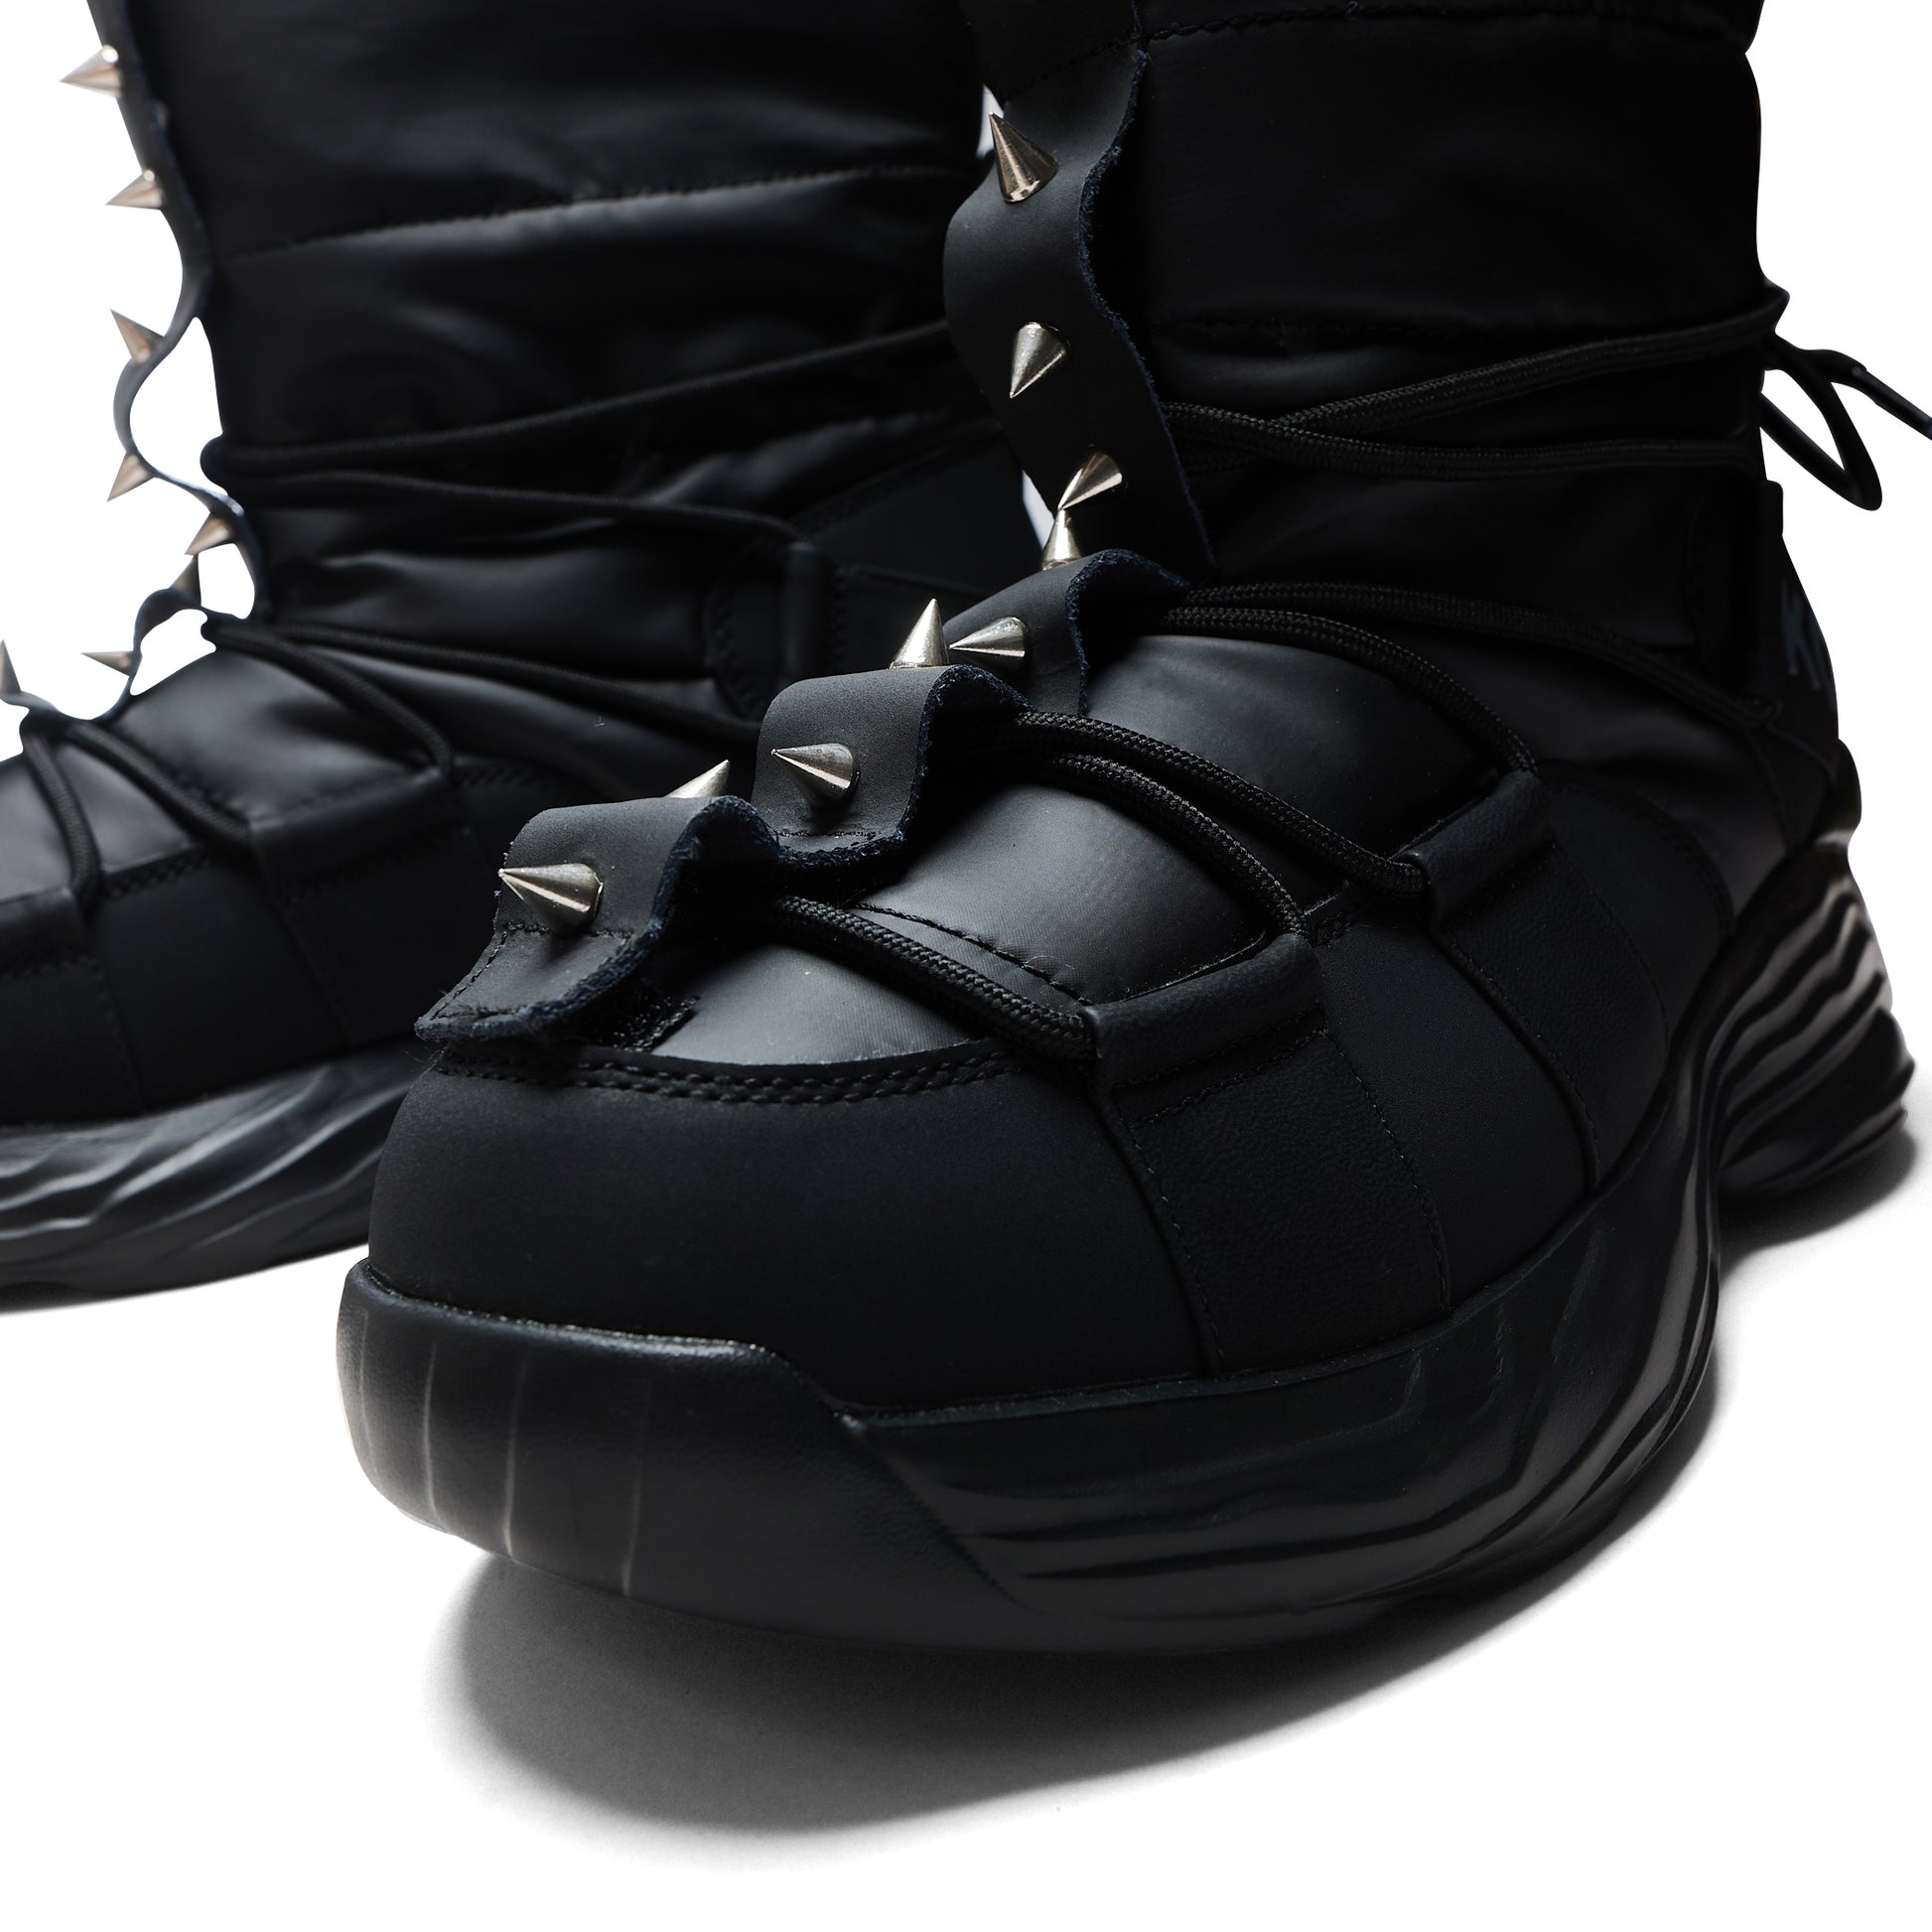 Cauldrife Demons Men's Spiked Snow Boots - Black - Ankle Boots - KOI Footwear - Black - Front Detail